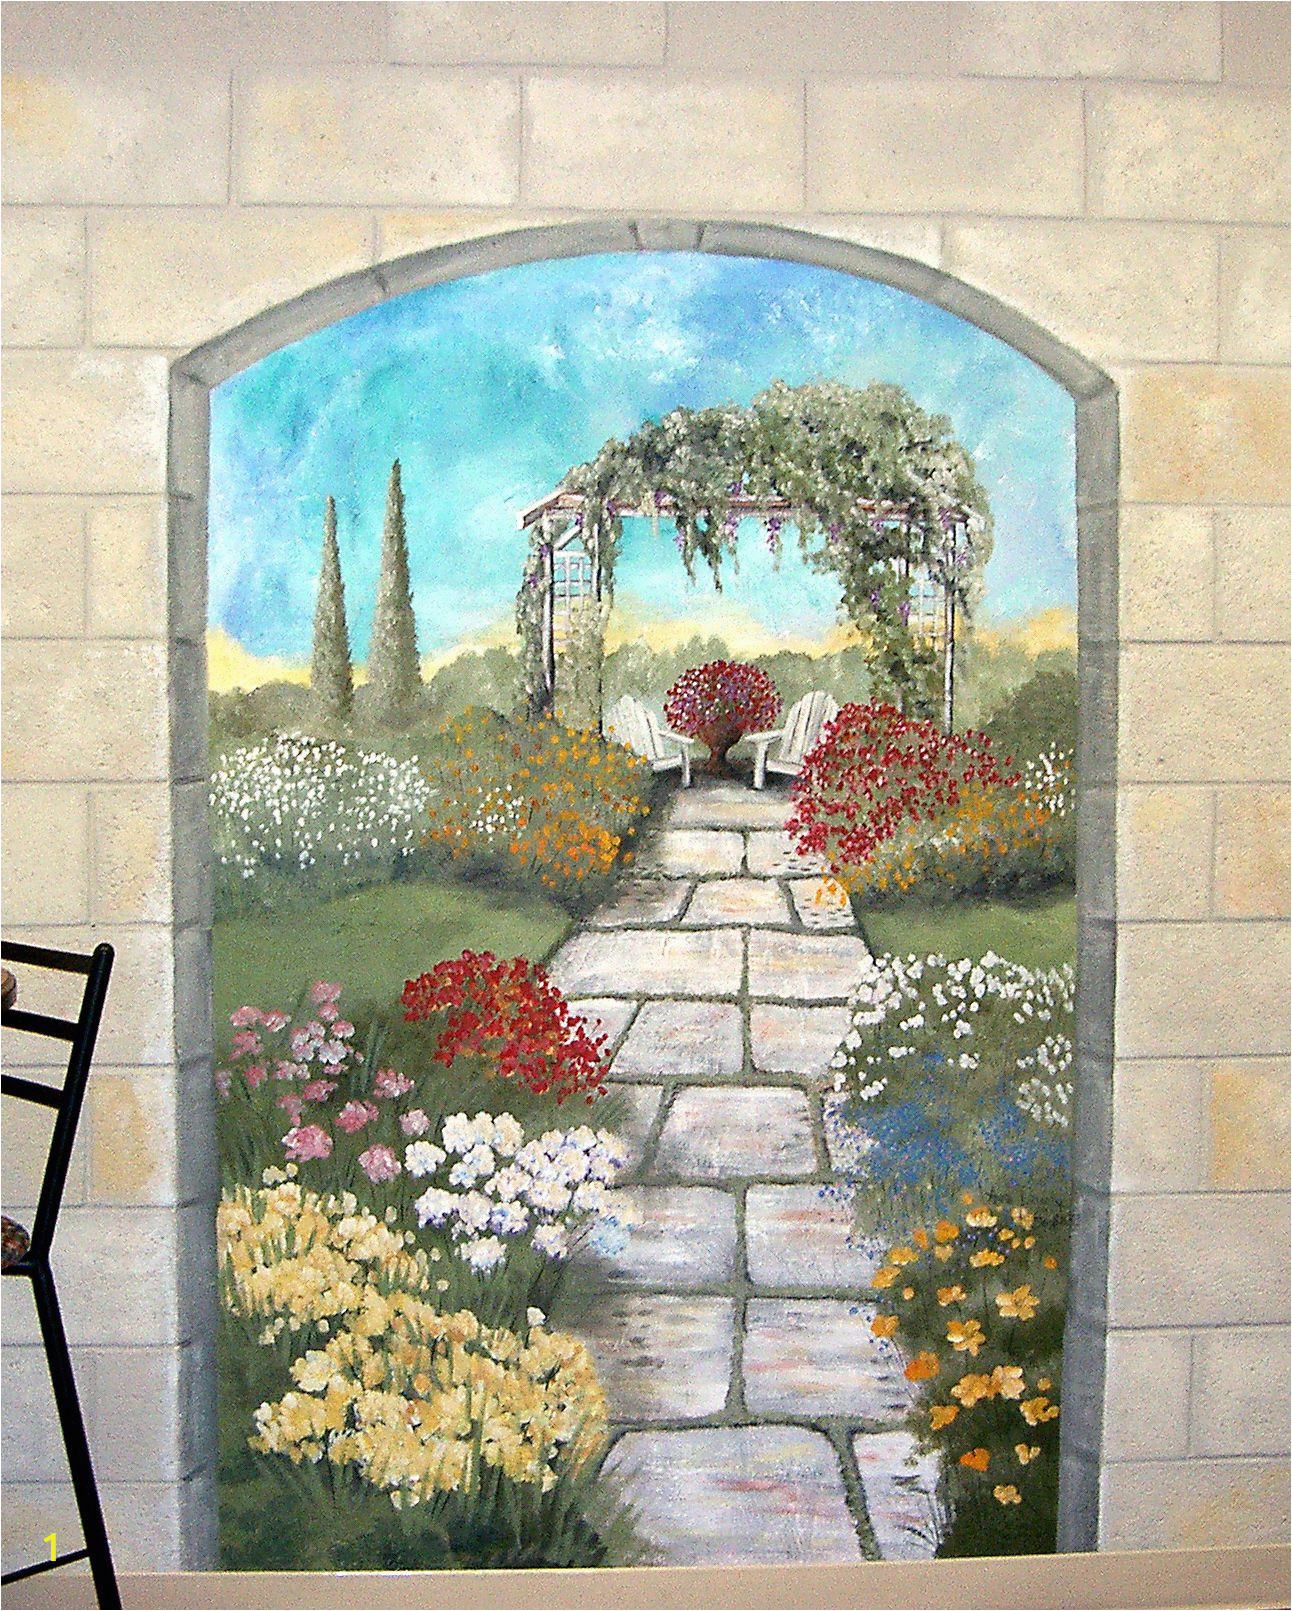 Mural Wall Painting Ideas Garden Mural On A Cement Block Wall Colorful Flower Garden